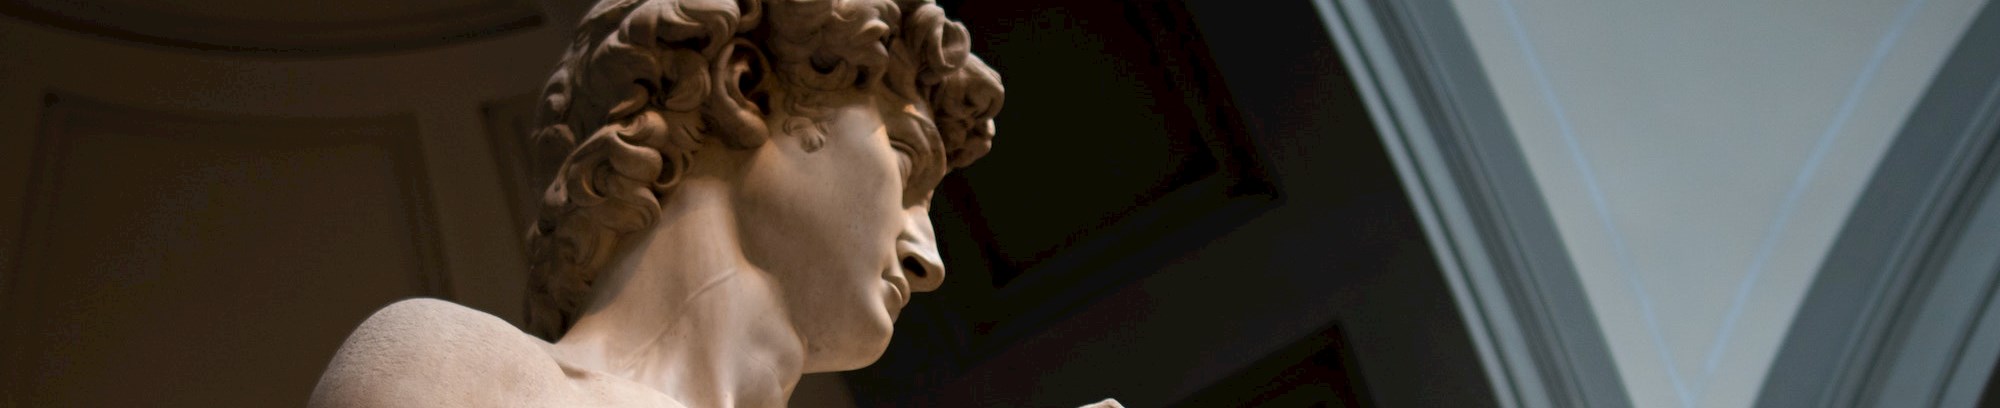 David statuen i Rom, Italienskundervisning hos FOF Køge Bugt